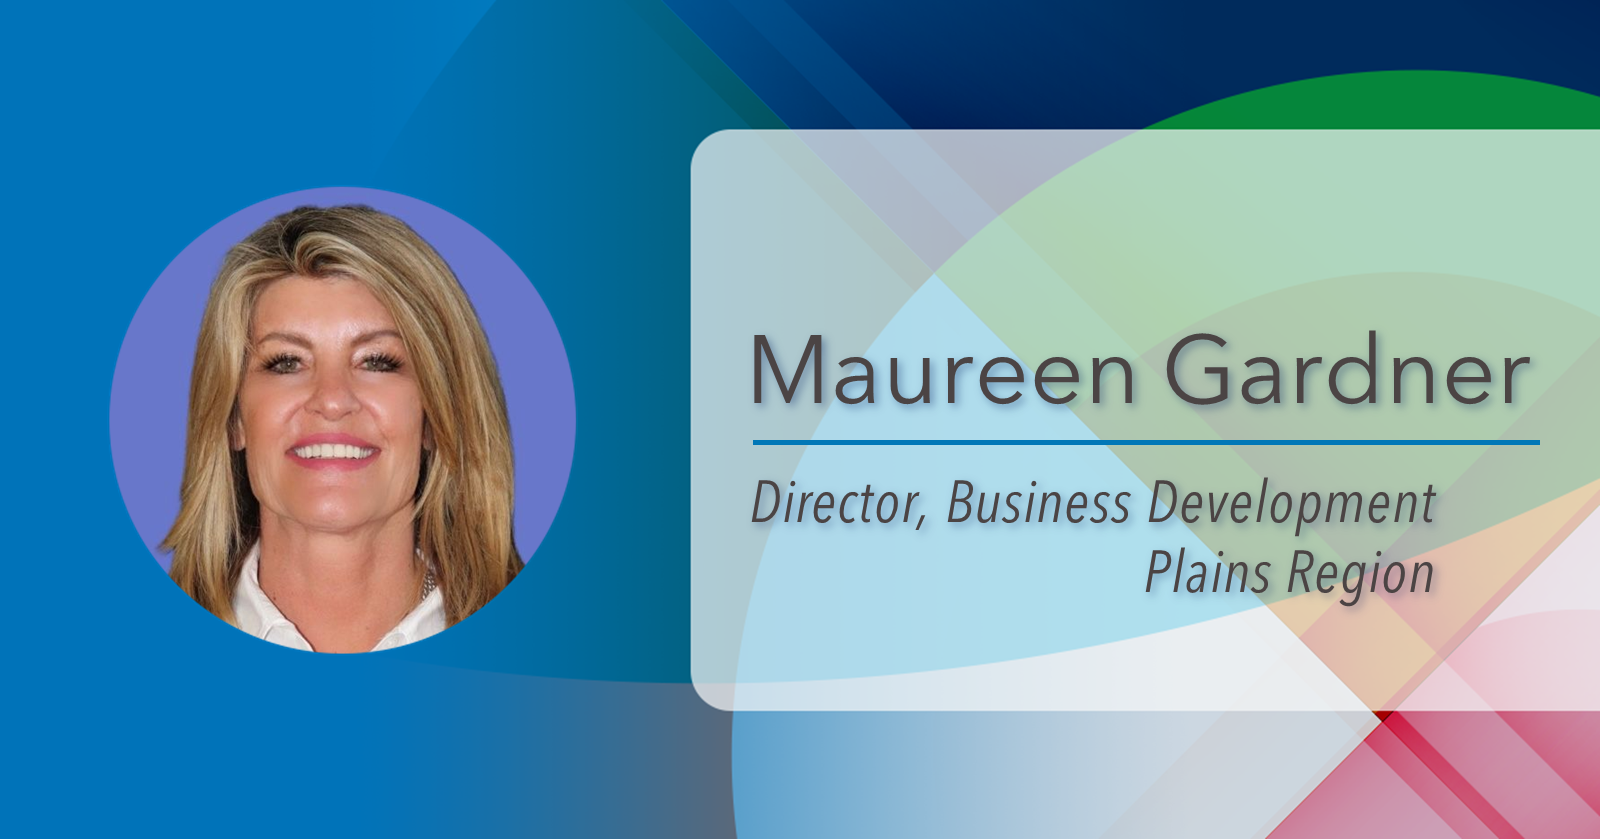 Maureen Gardner Joins Empyrean’s Growing Sales Team as Director, Business Development in the Plains Region